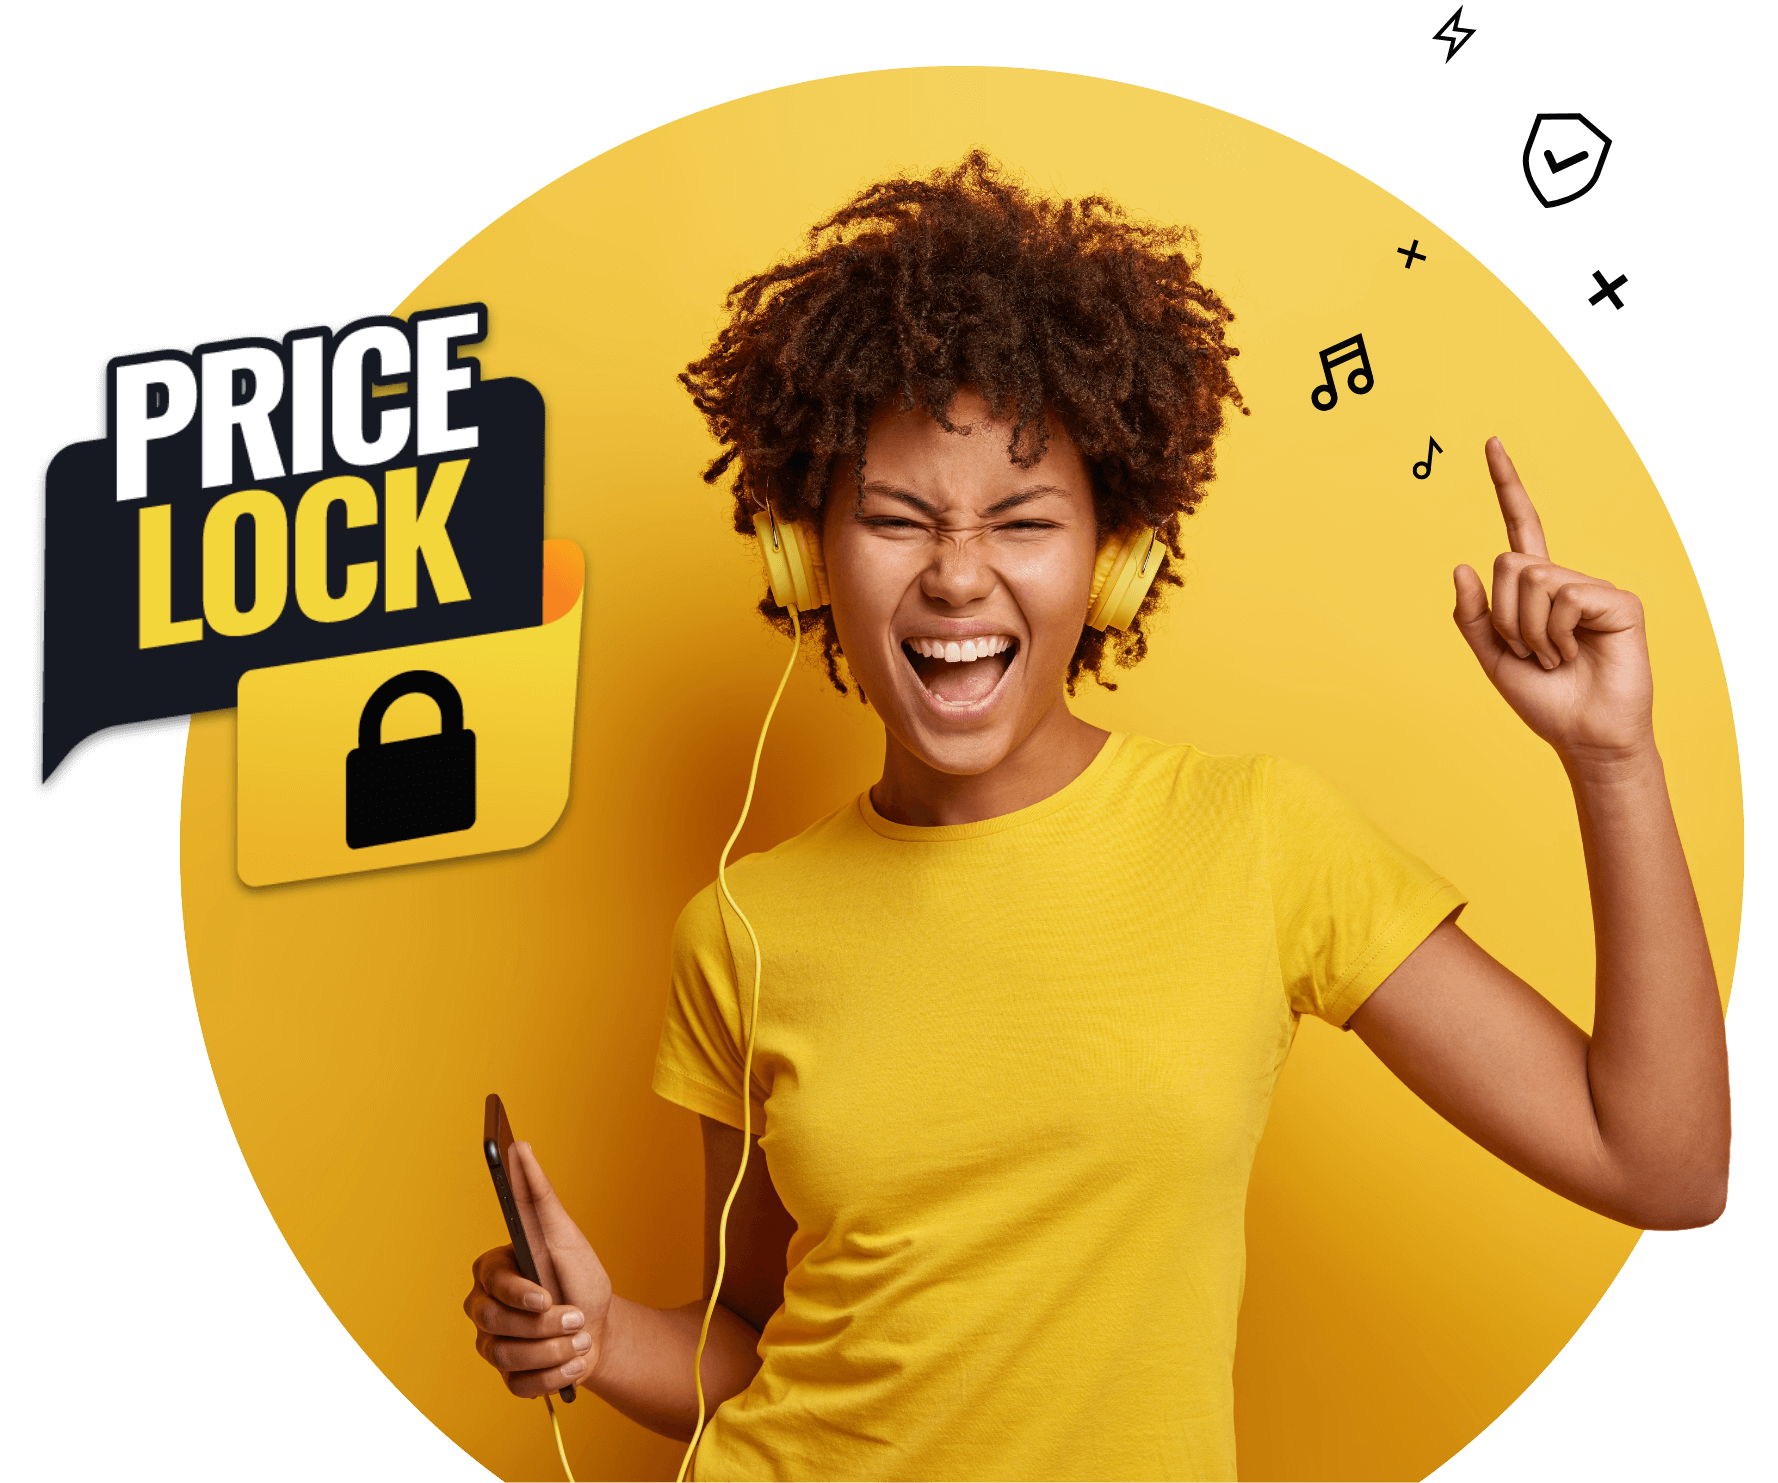 Price Lock